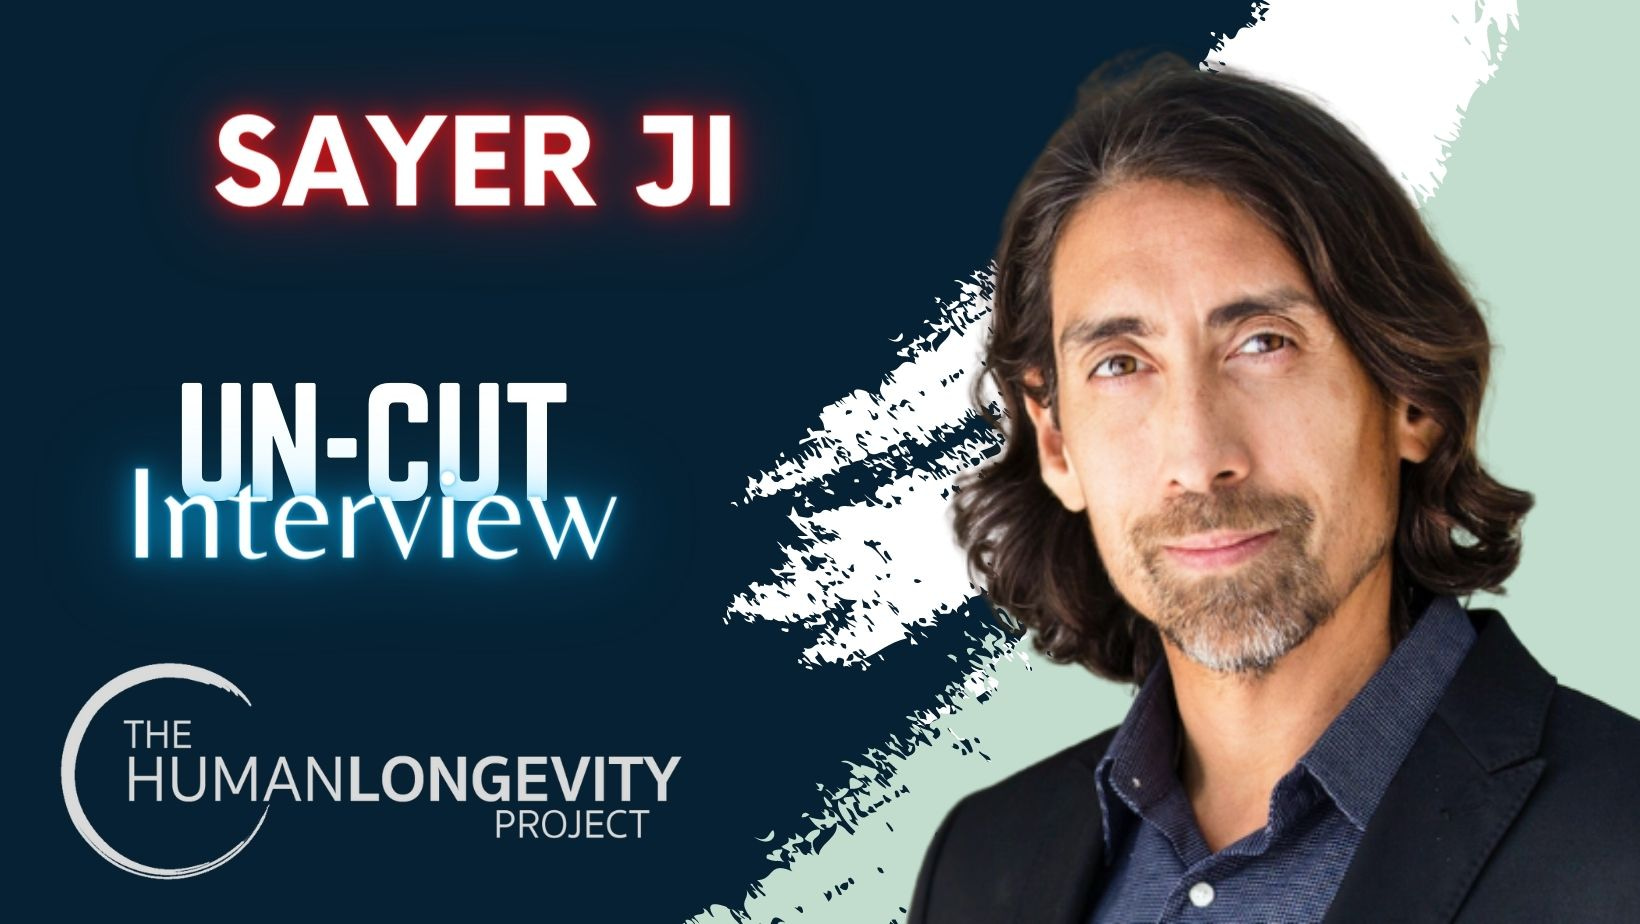 Human Longevity Project Uncut Interview With Sayer Ji